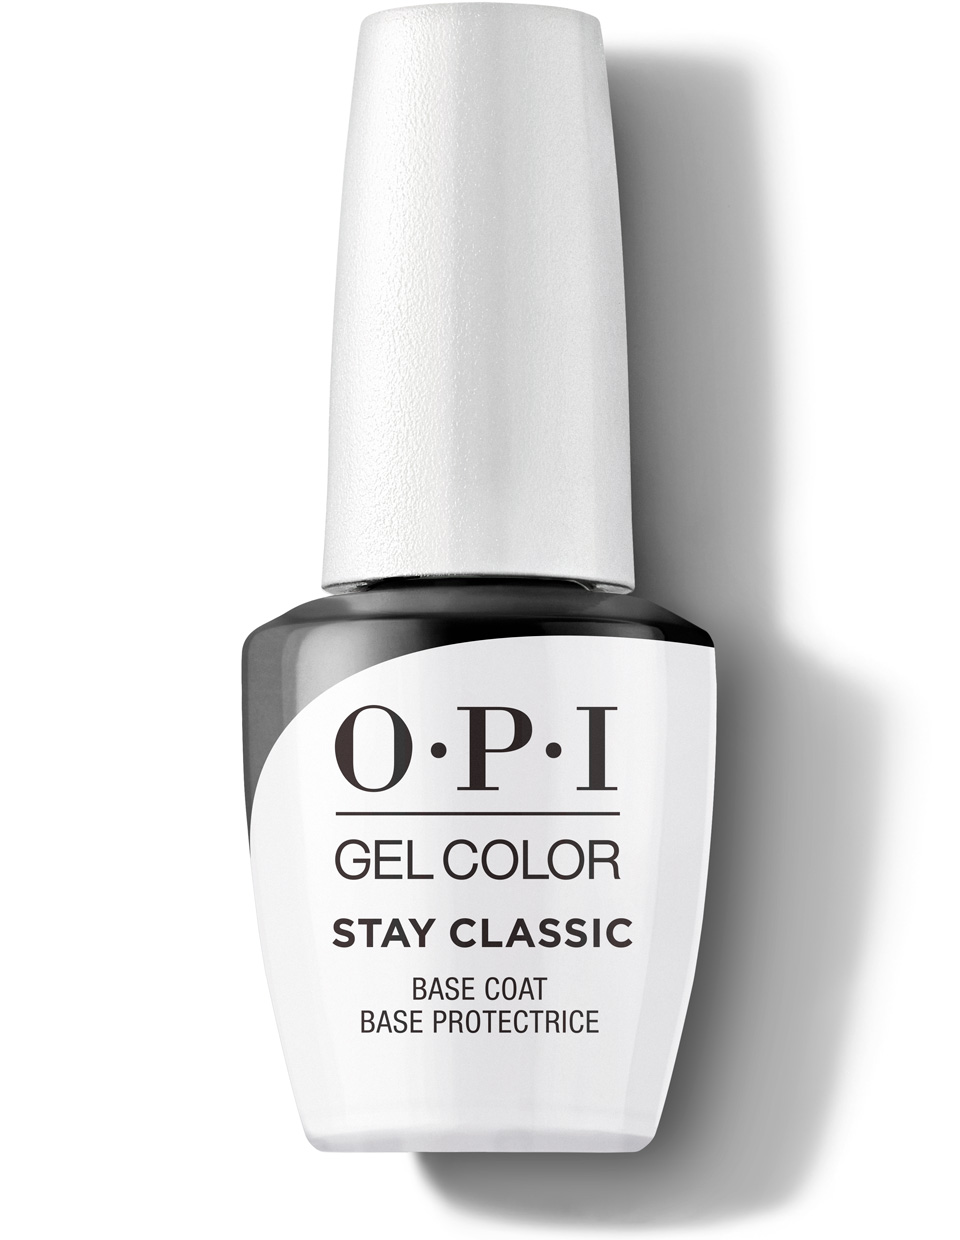 OPI GelColor Stay Classic Base Coat Gel Nail Polish | OPI